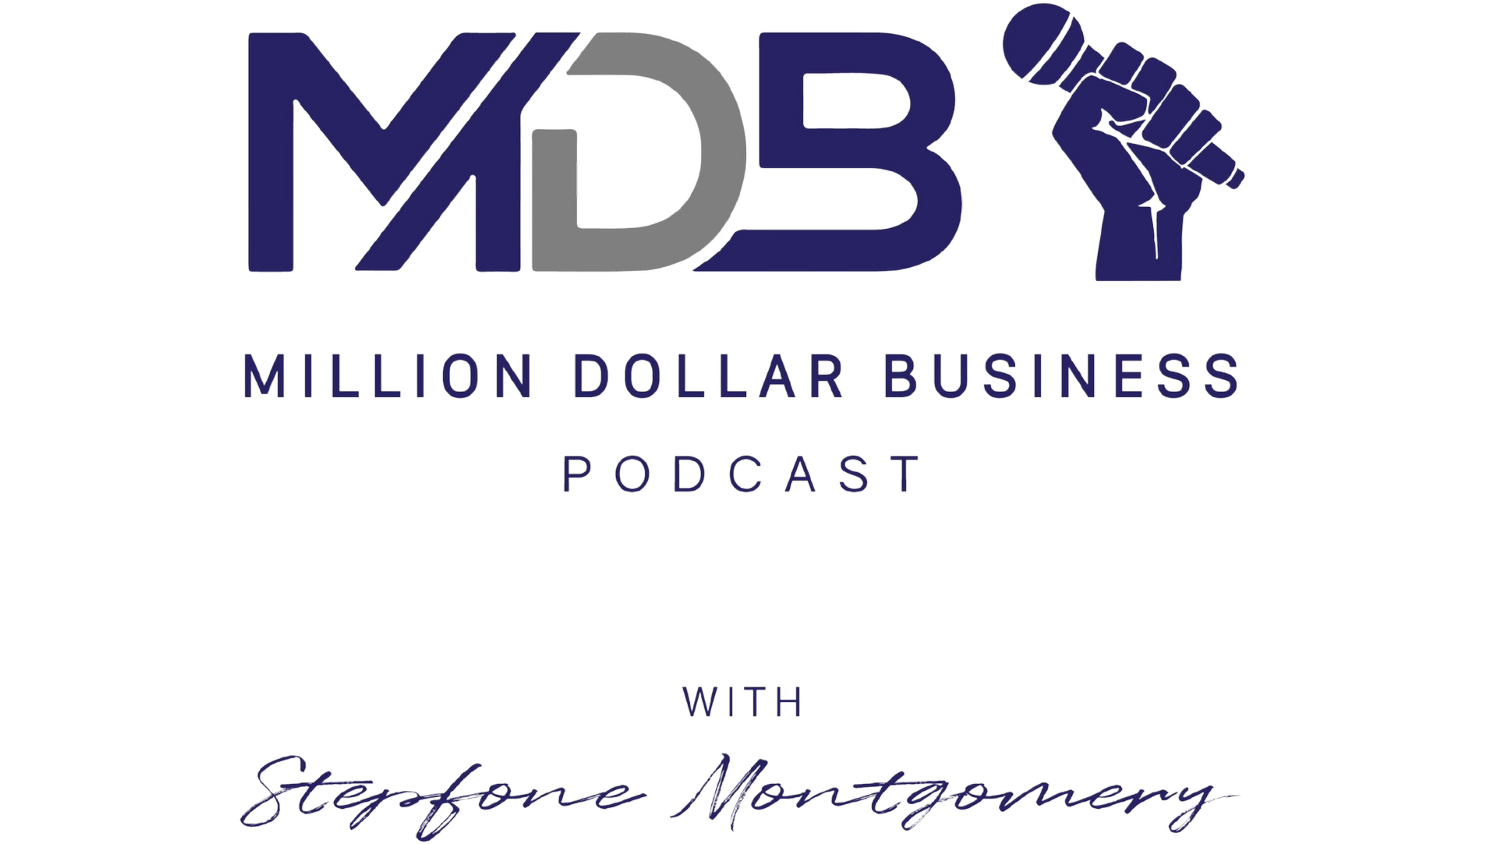 Million Dollar Business Podcast